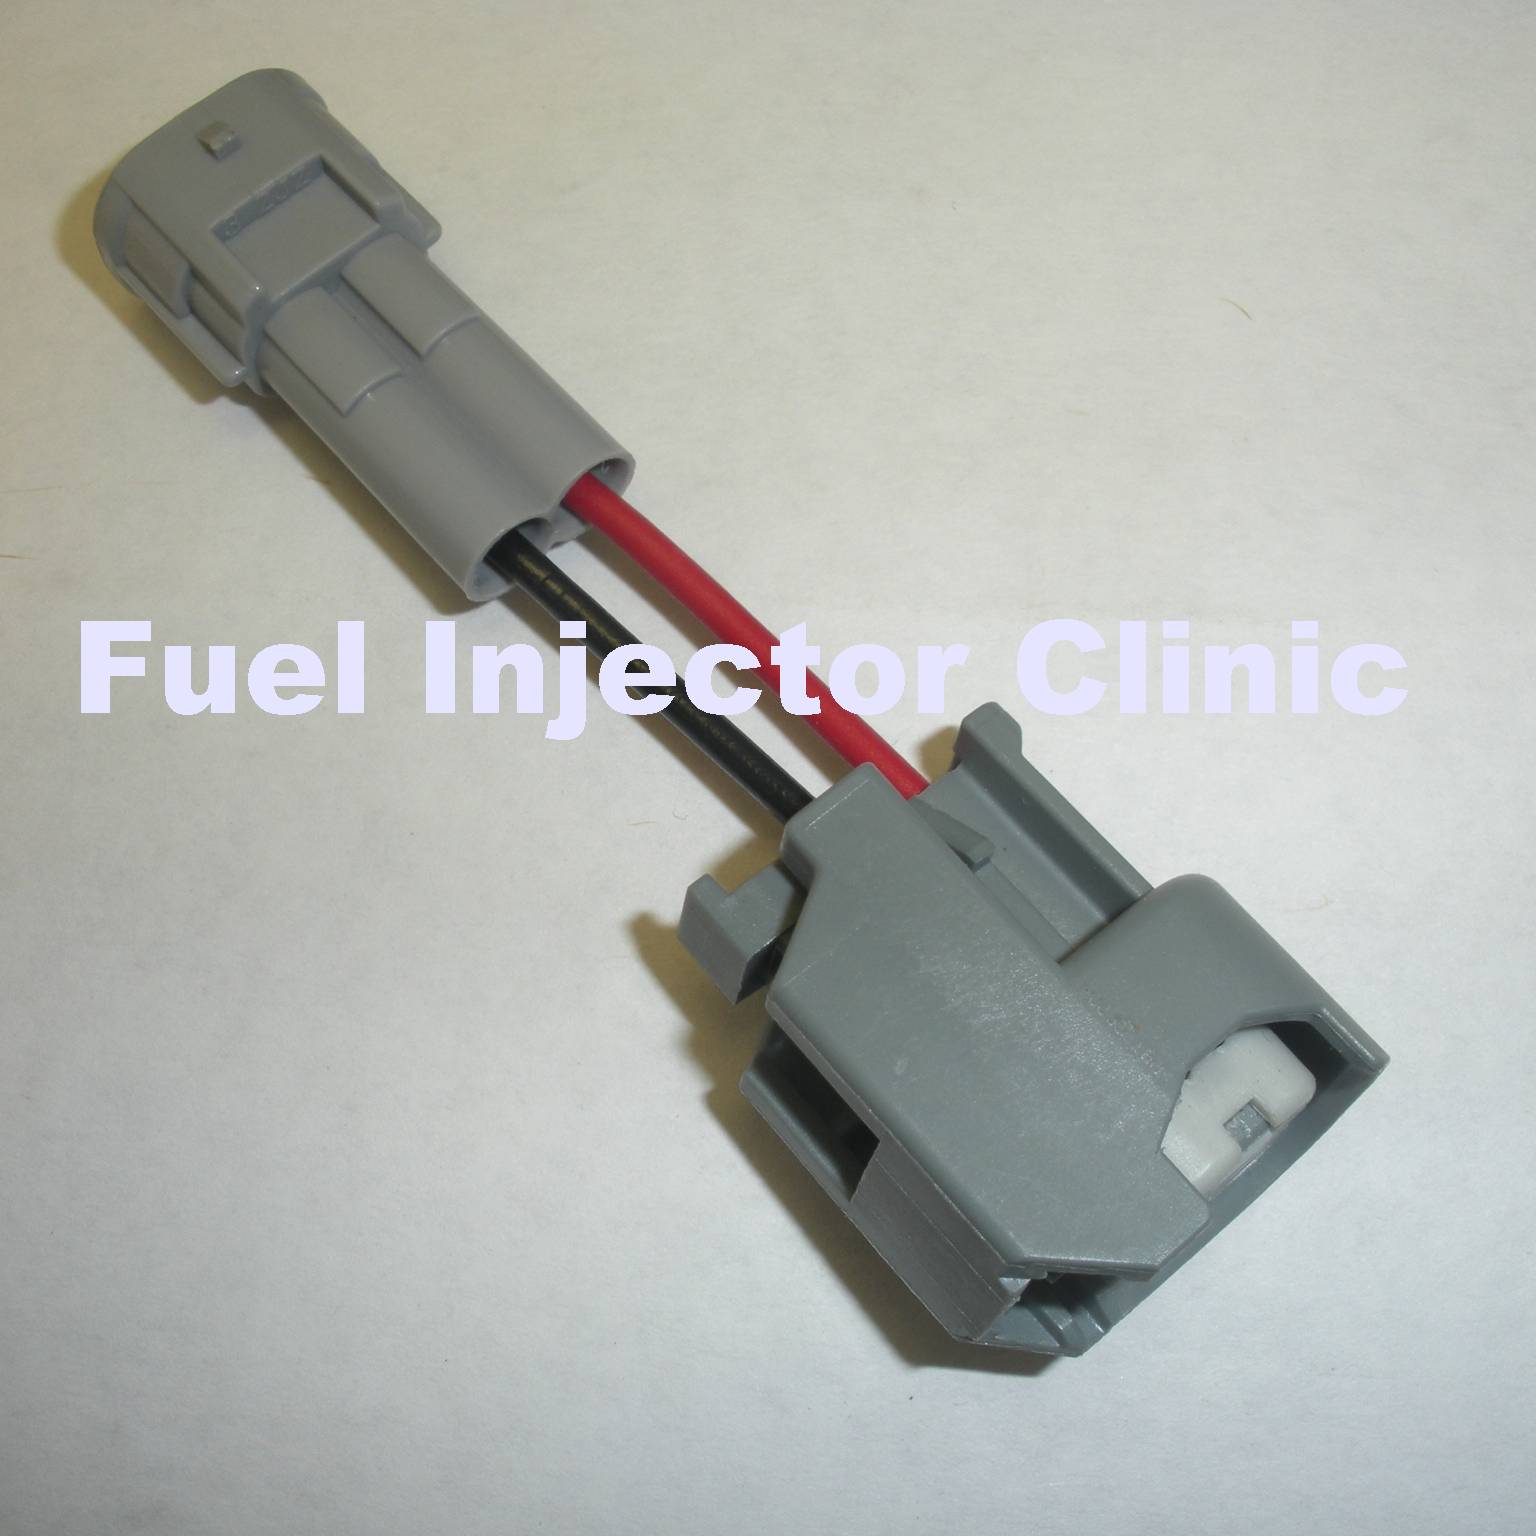 Fuel Injector Clinic Jetronic/EV1 to Toyota plug adaptors